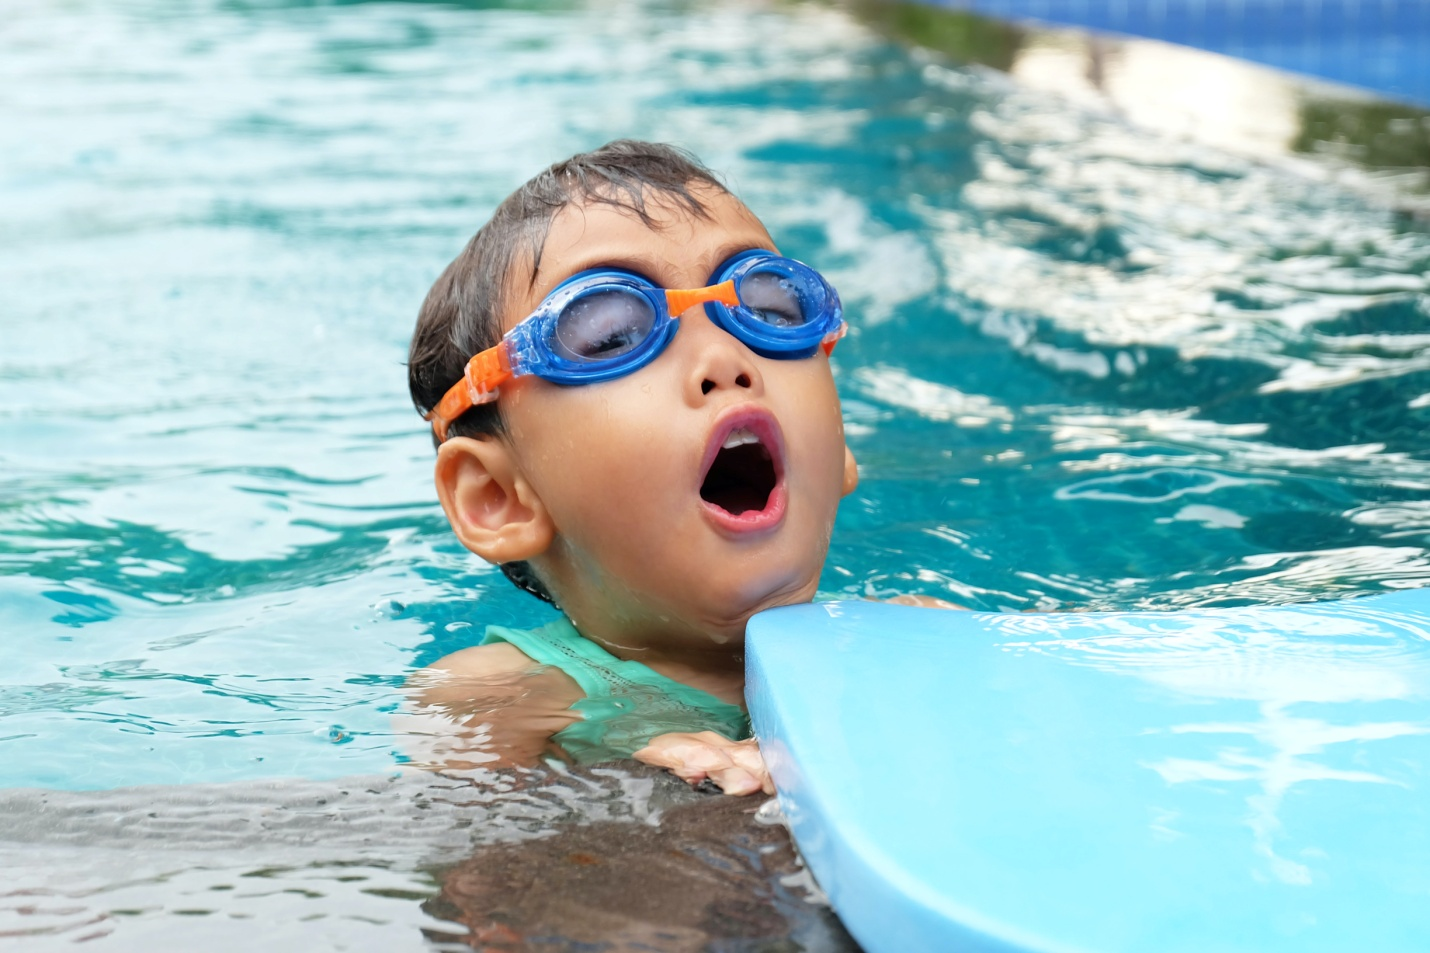 A boy enjoying himself in a swimming pool